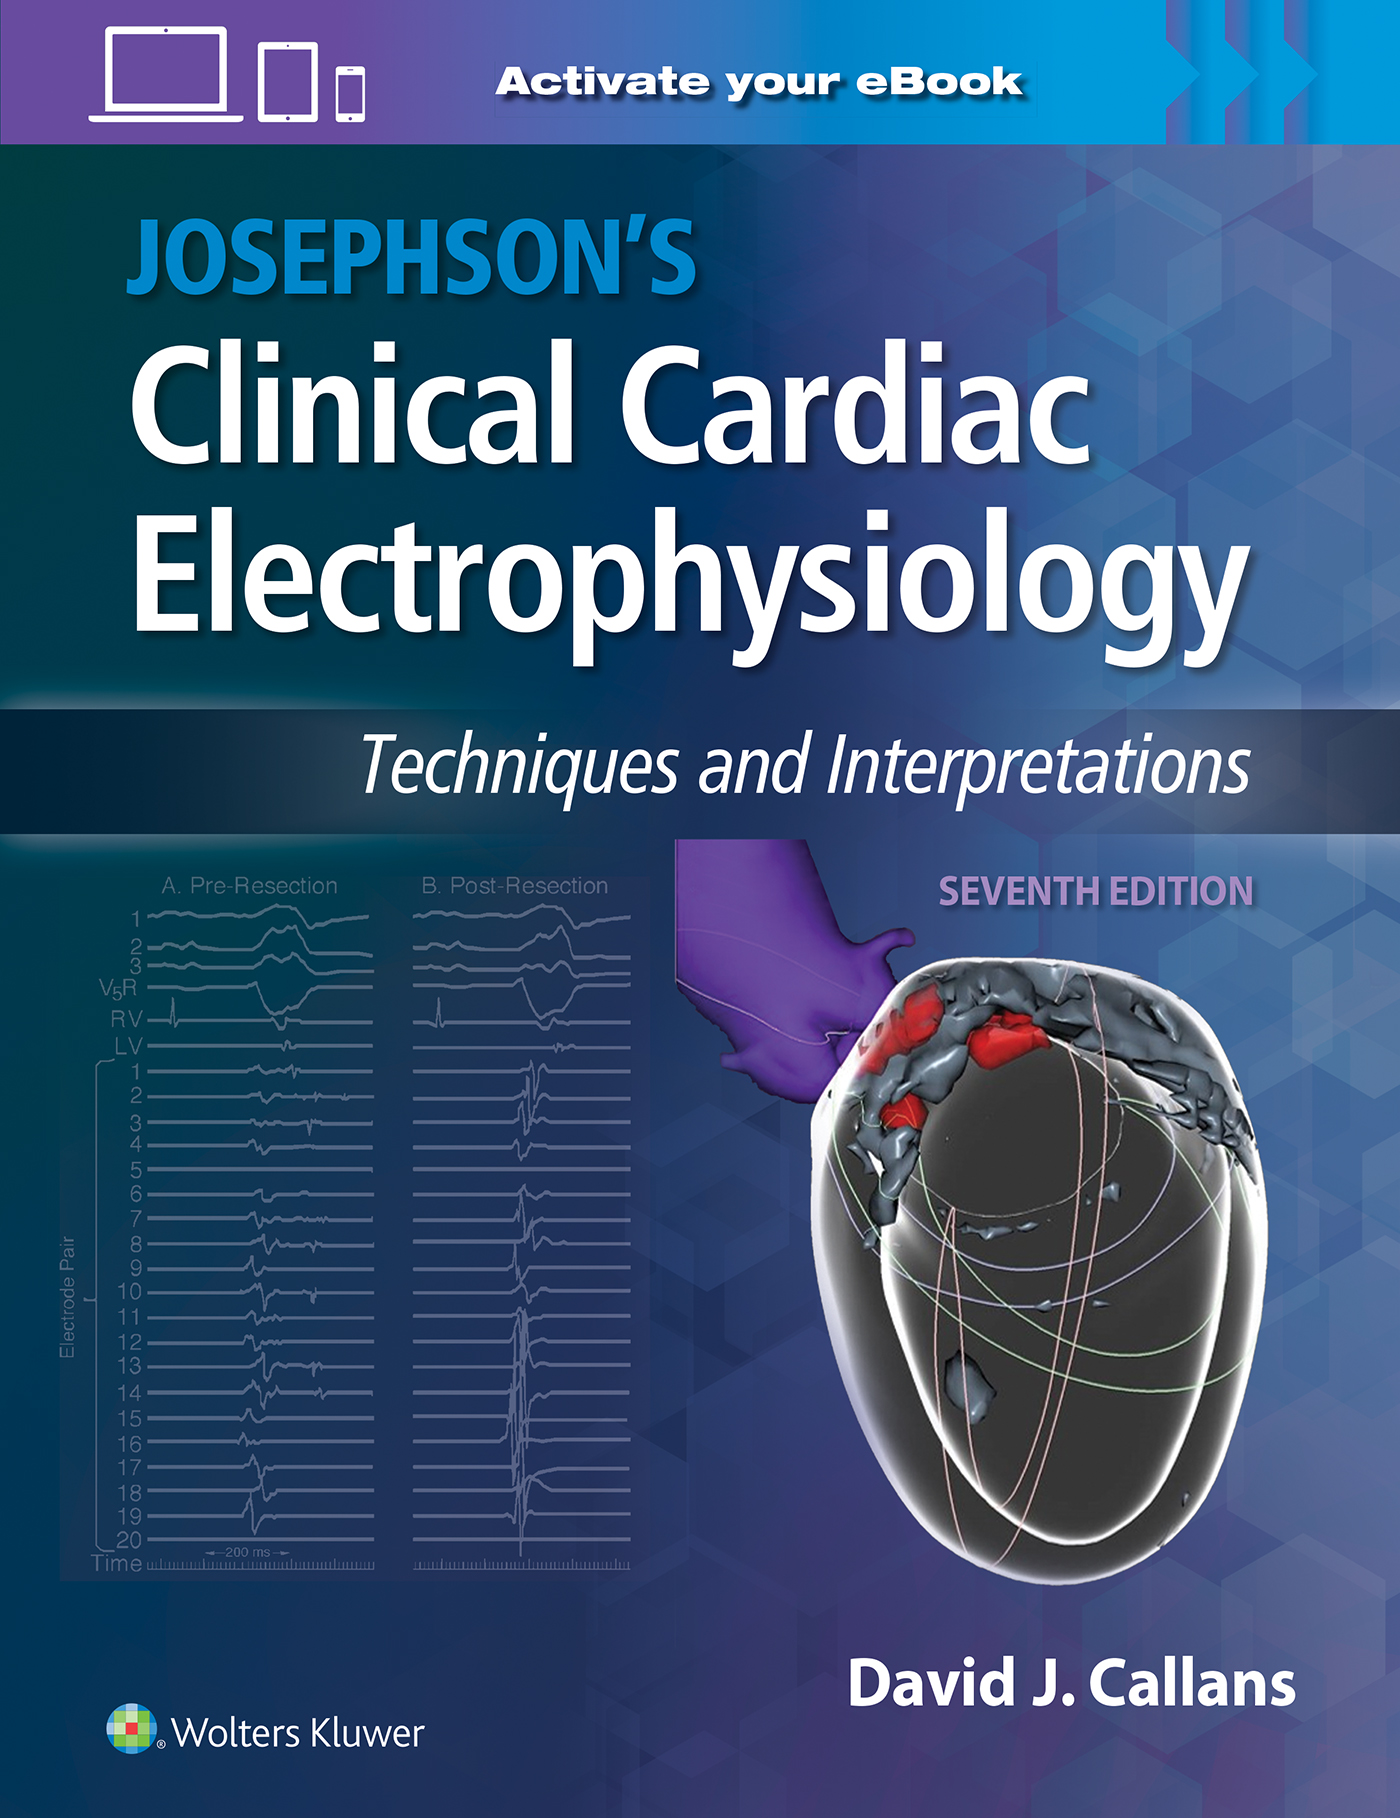 Josephson's Clinical Cardiac Electrophysiology, 7th ed.- Techniques & Interpretations